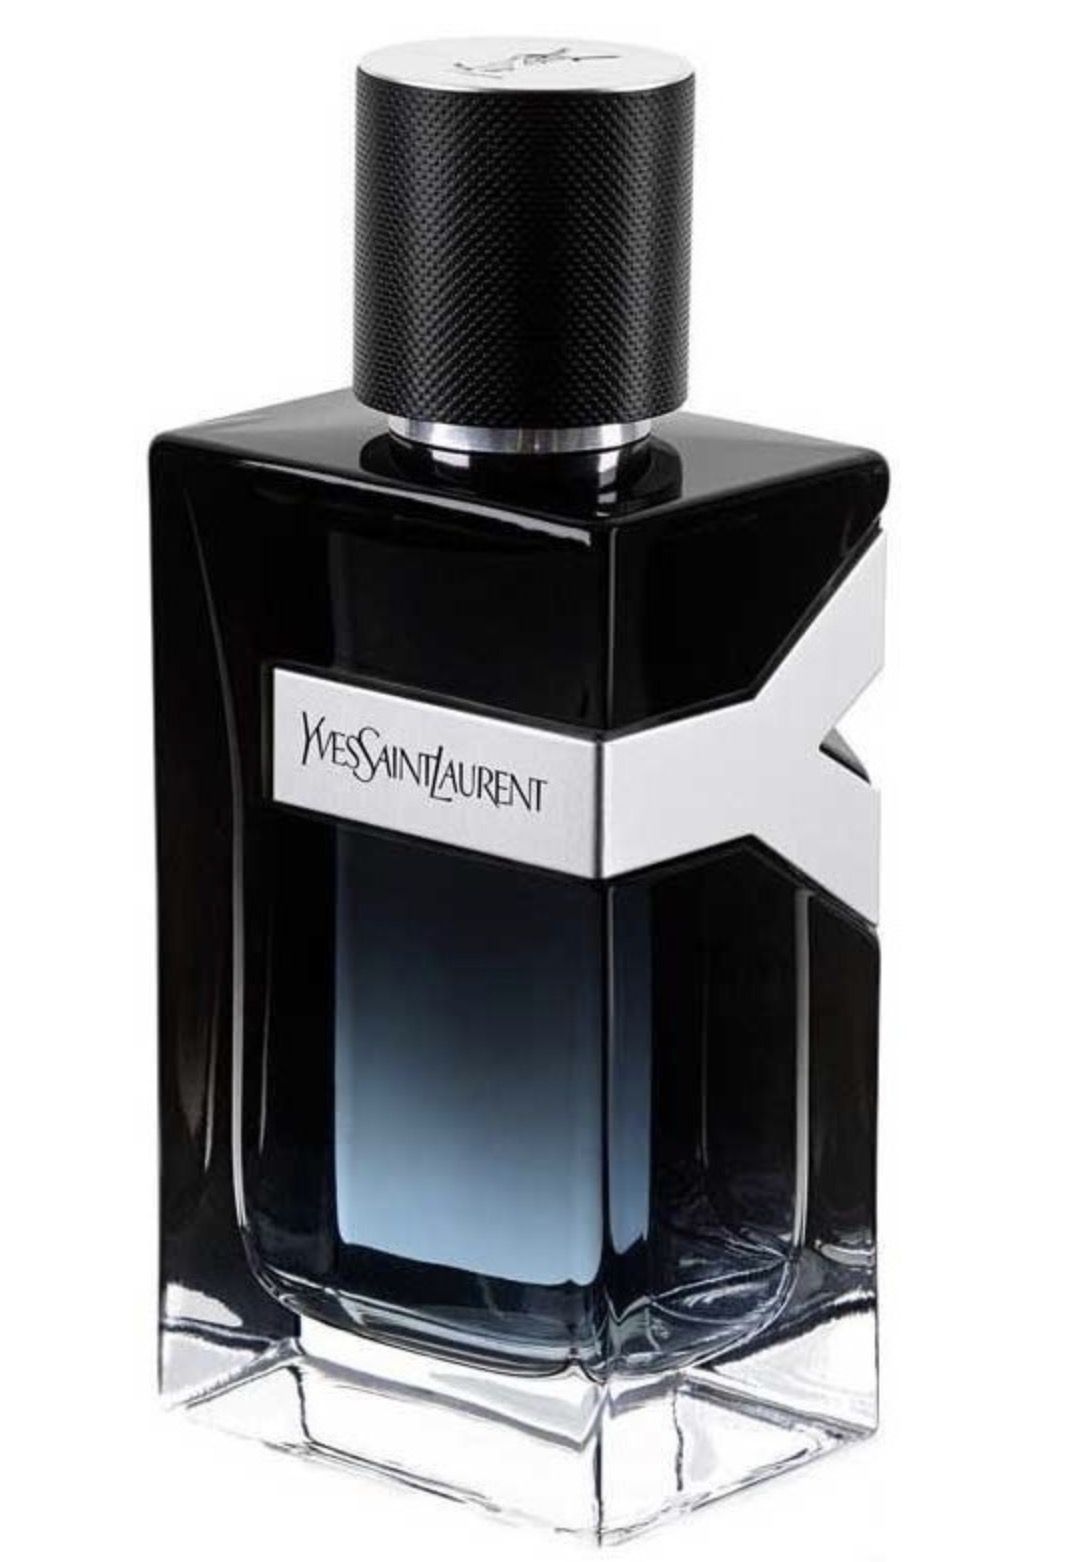 Yves Saint Laurent Y Herren Eau de Parfum Set 60ml + 10ml für 51,95€ (statt 62€)